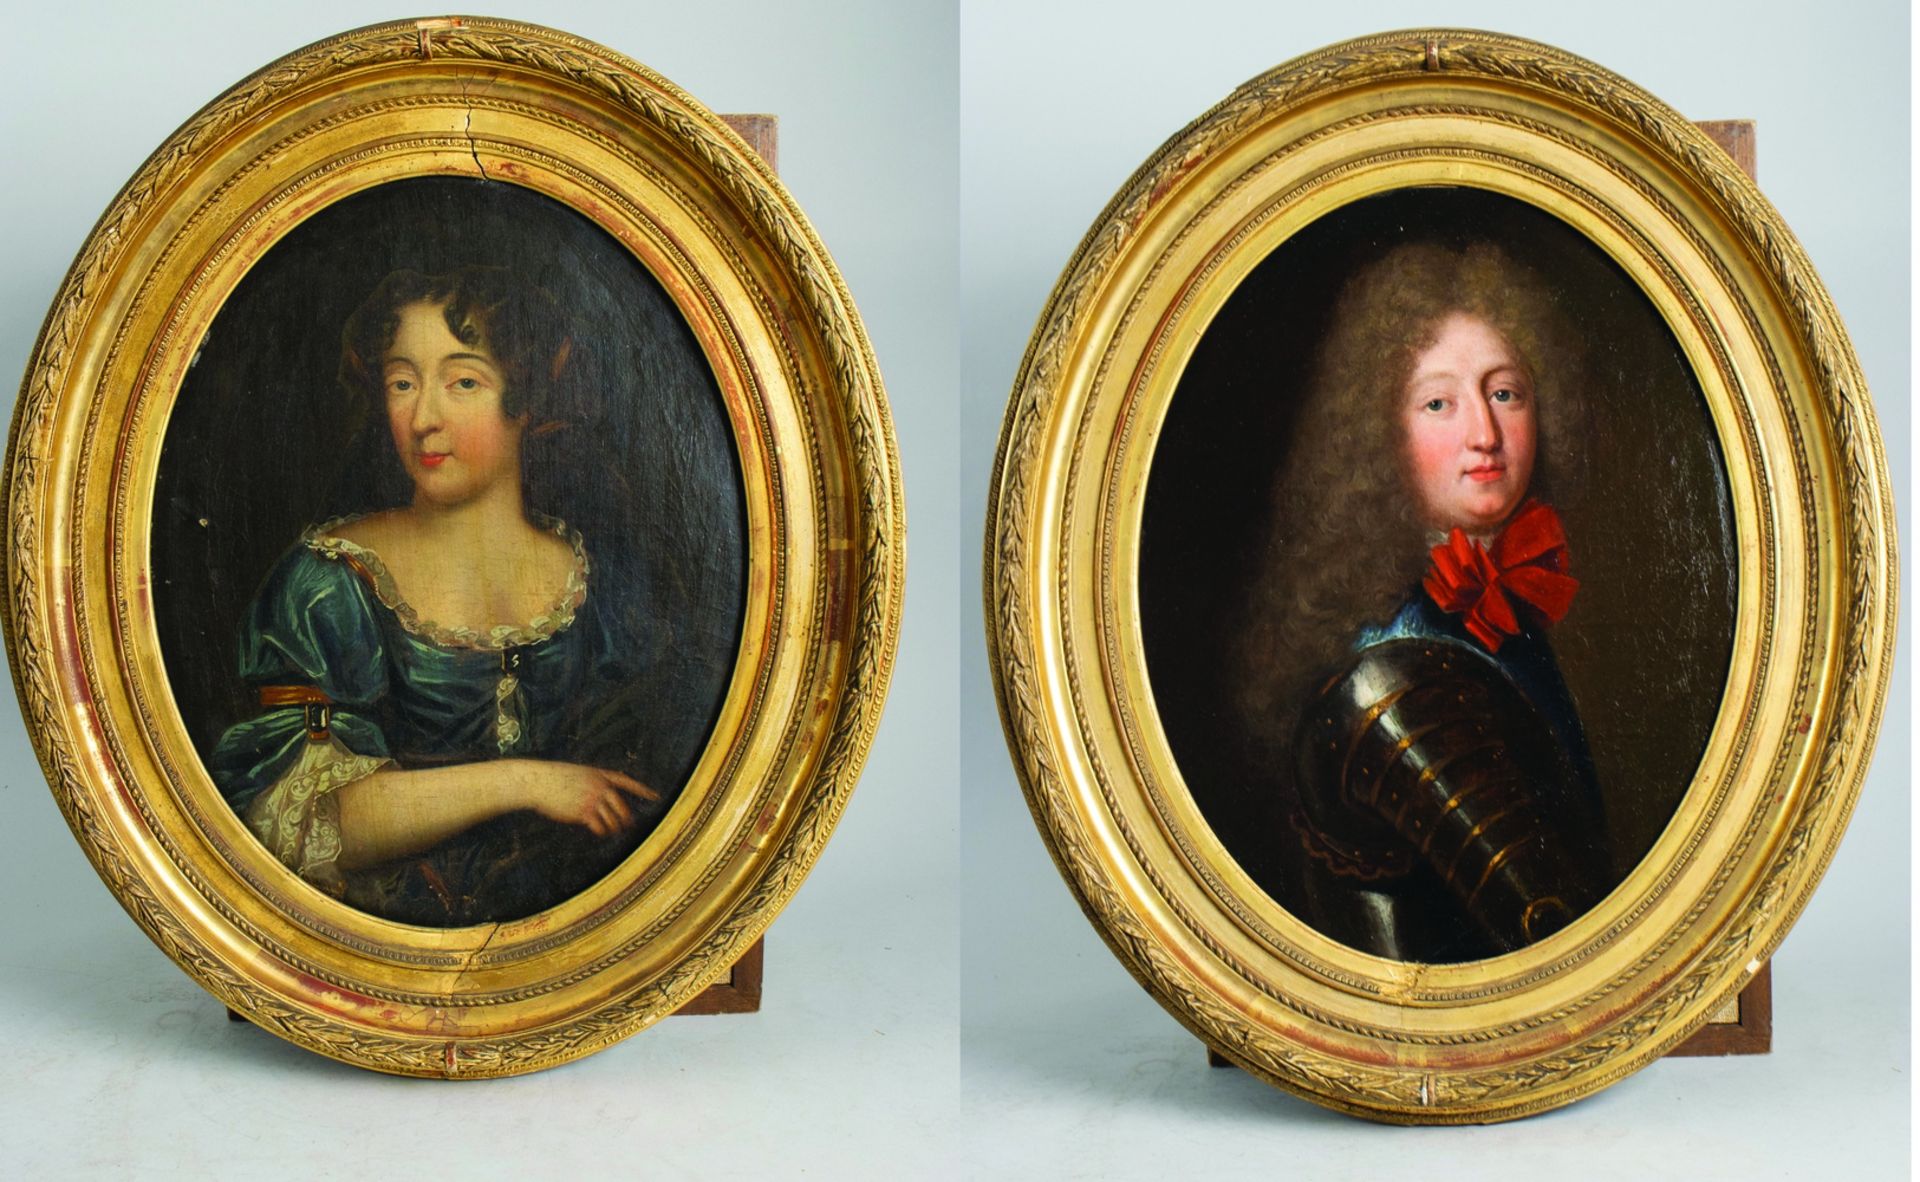 Gemäldepaar 'Le Grand Dauphin' und 'La Grande Dauphine', 17. Jh.